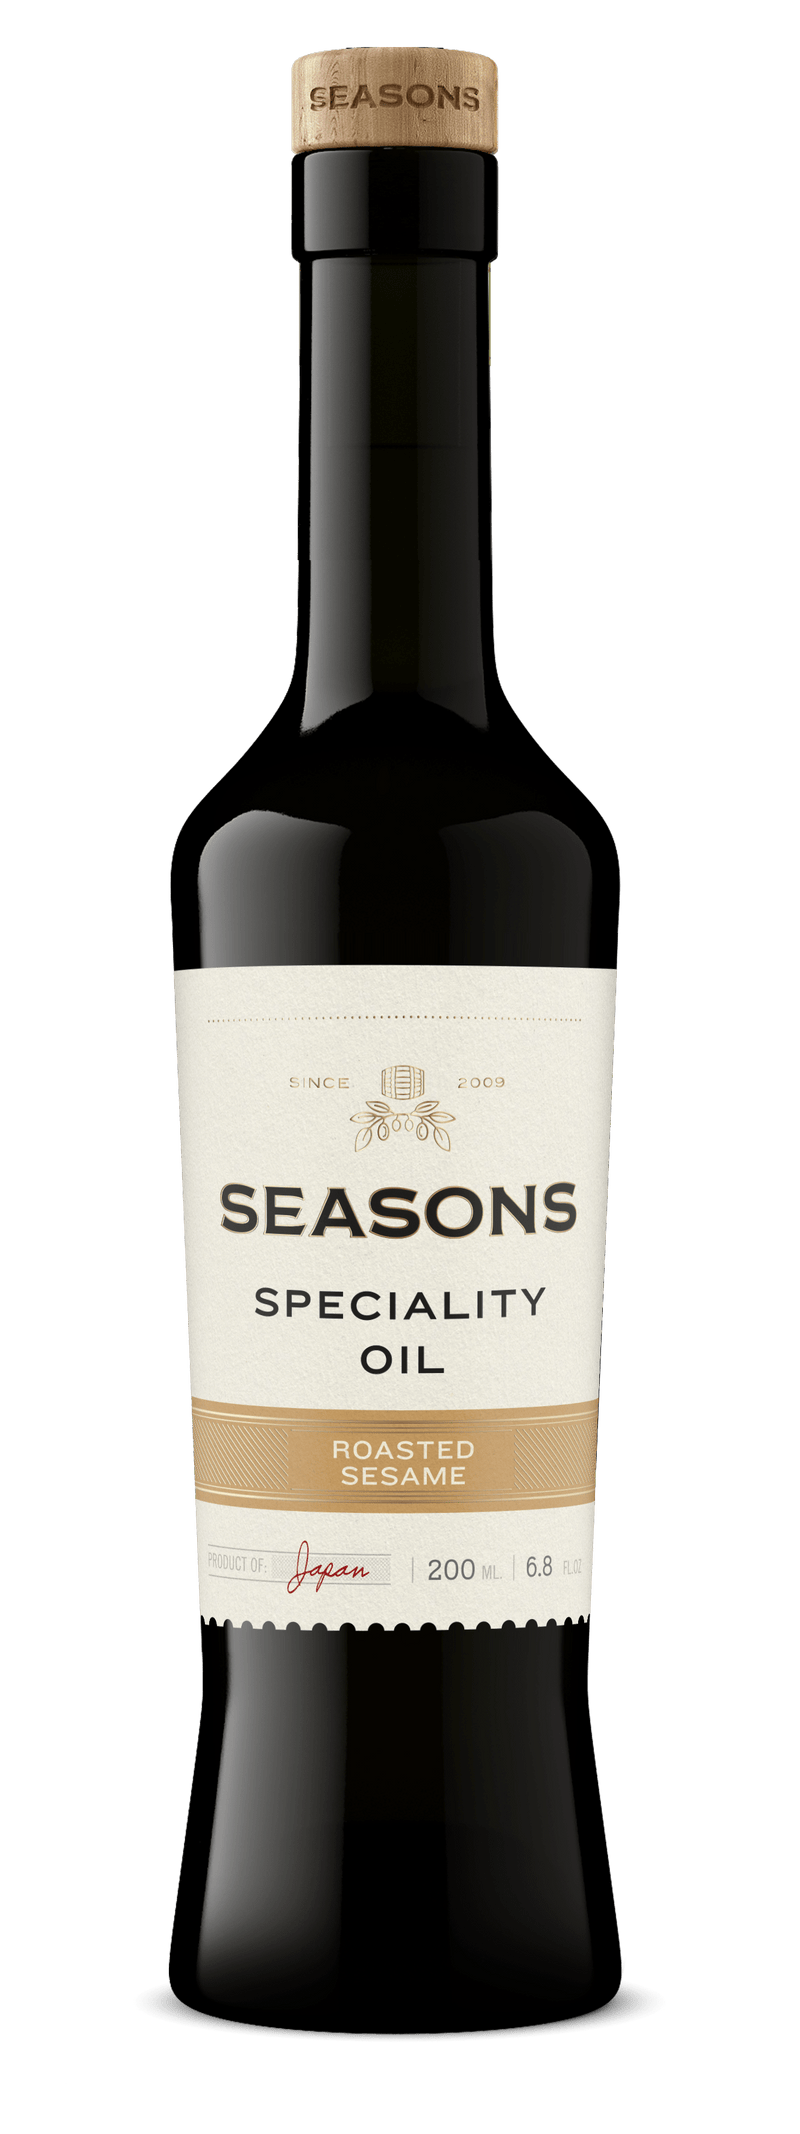 Seasons Specialty Oils 200mL Roasted Sesame Oil